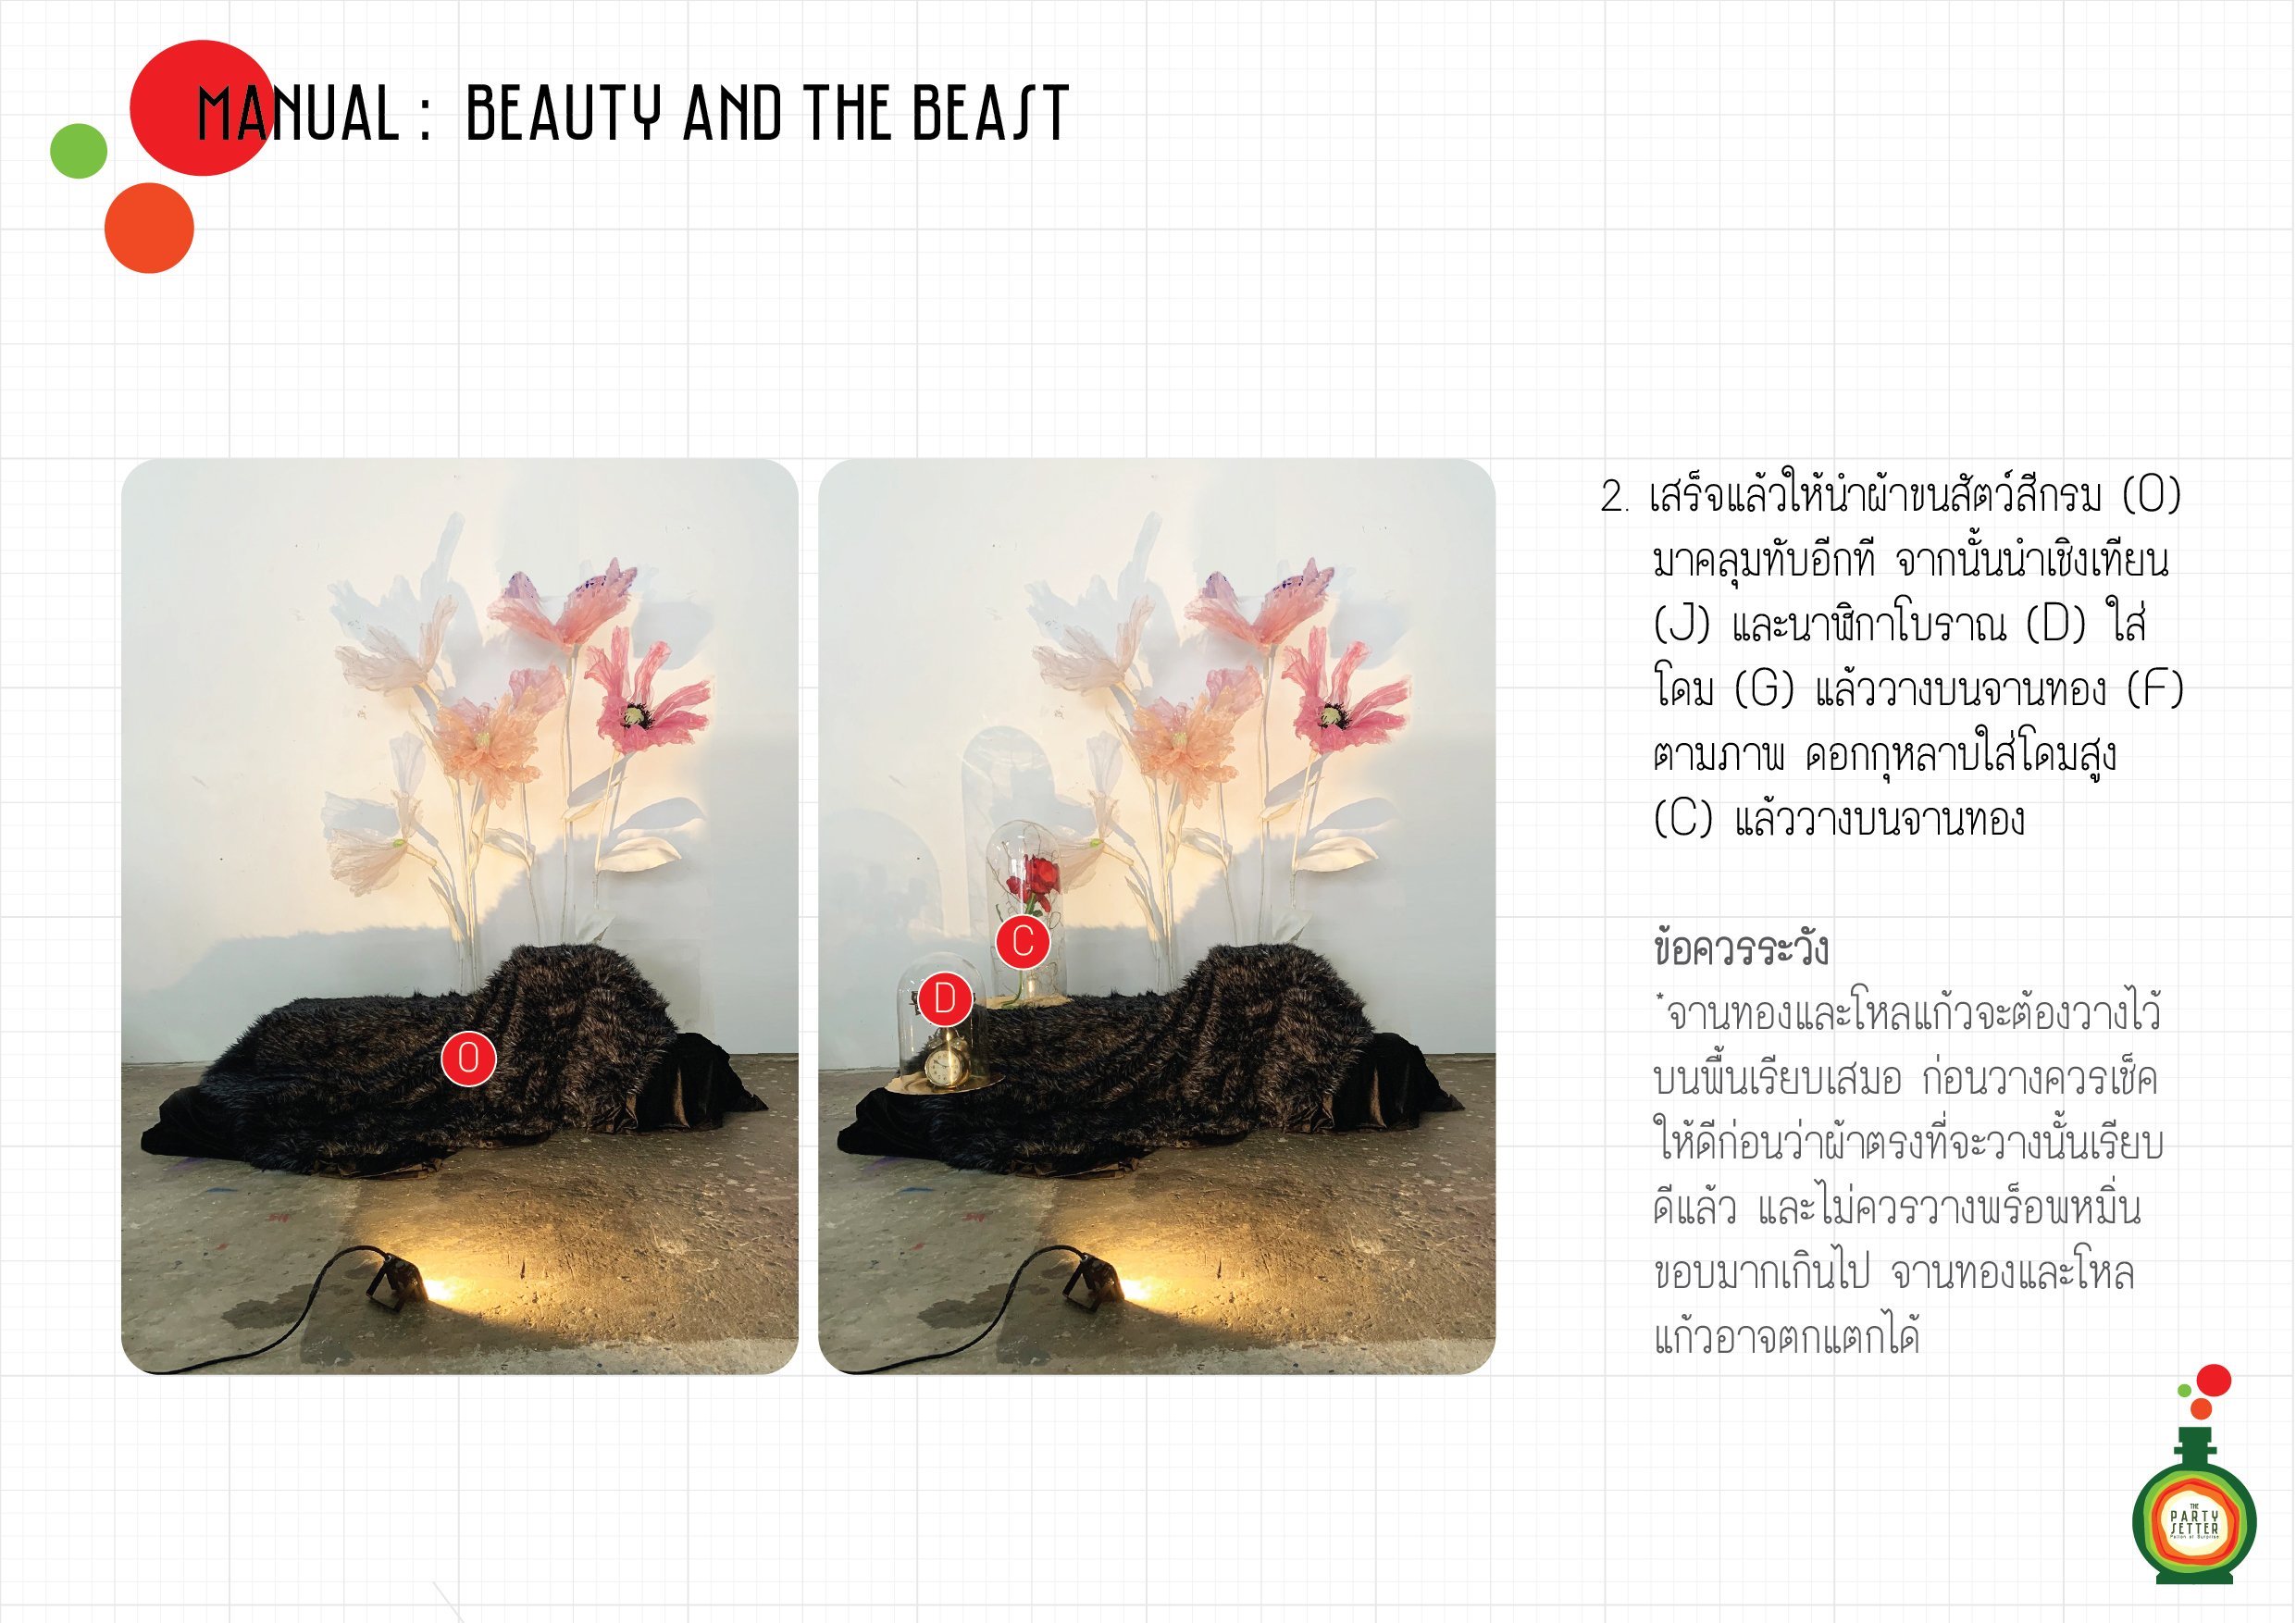 Manual_Beauty and the Beast-02-01.jpg